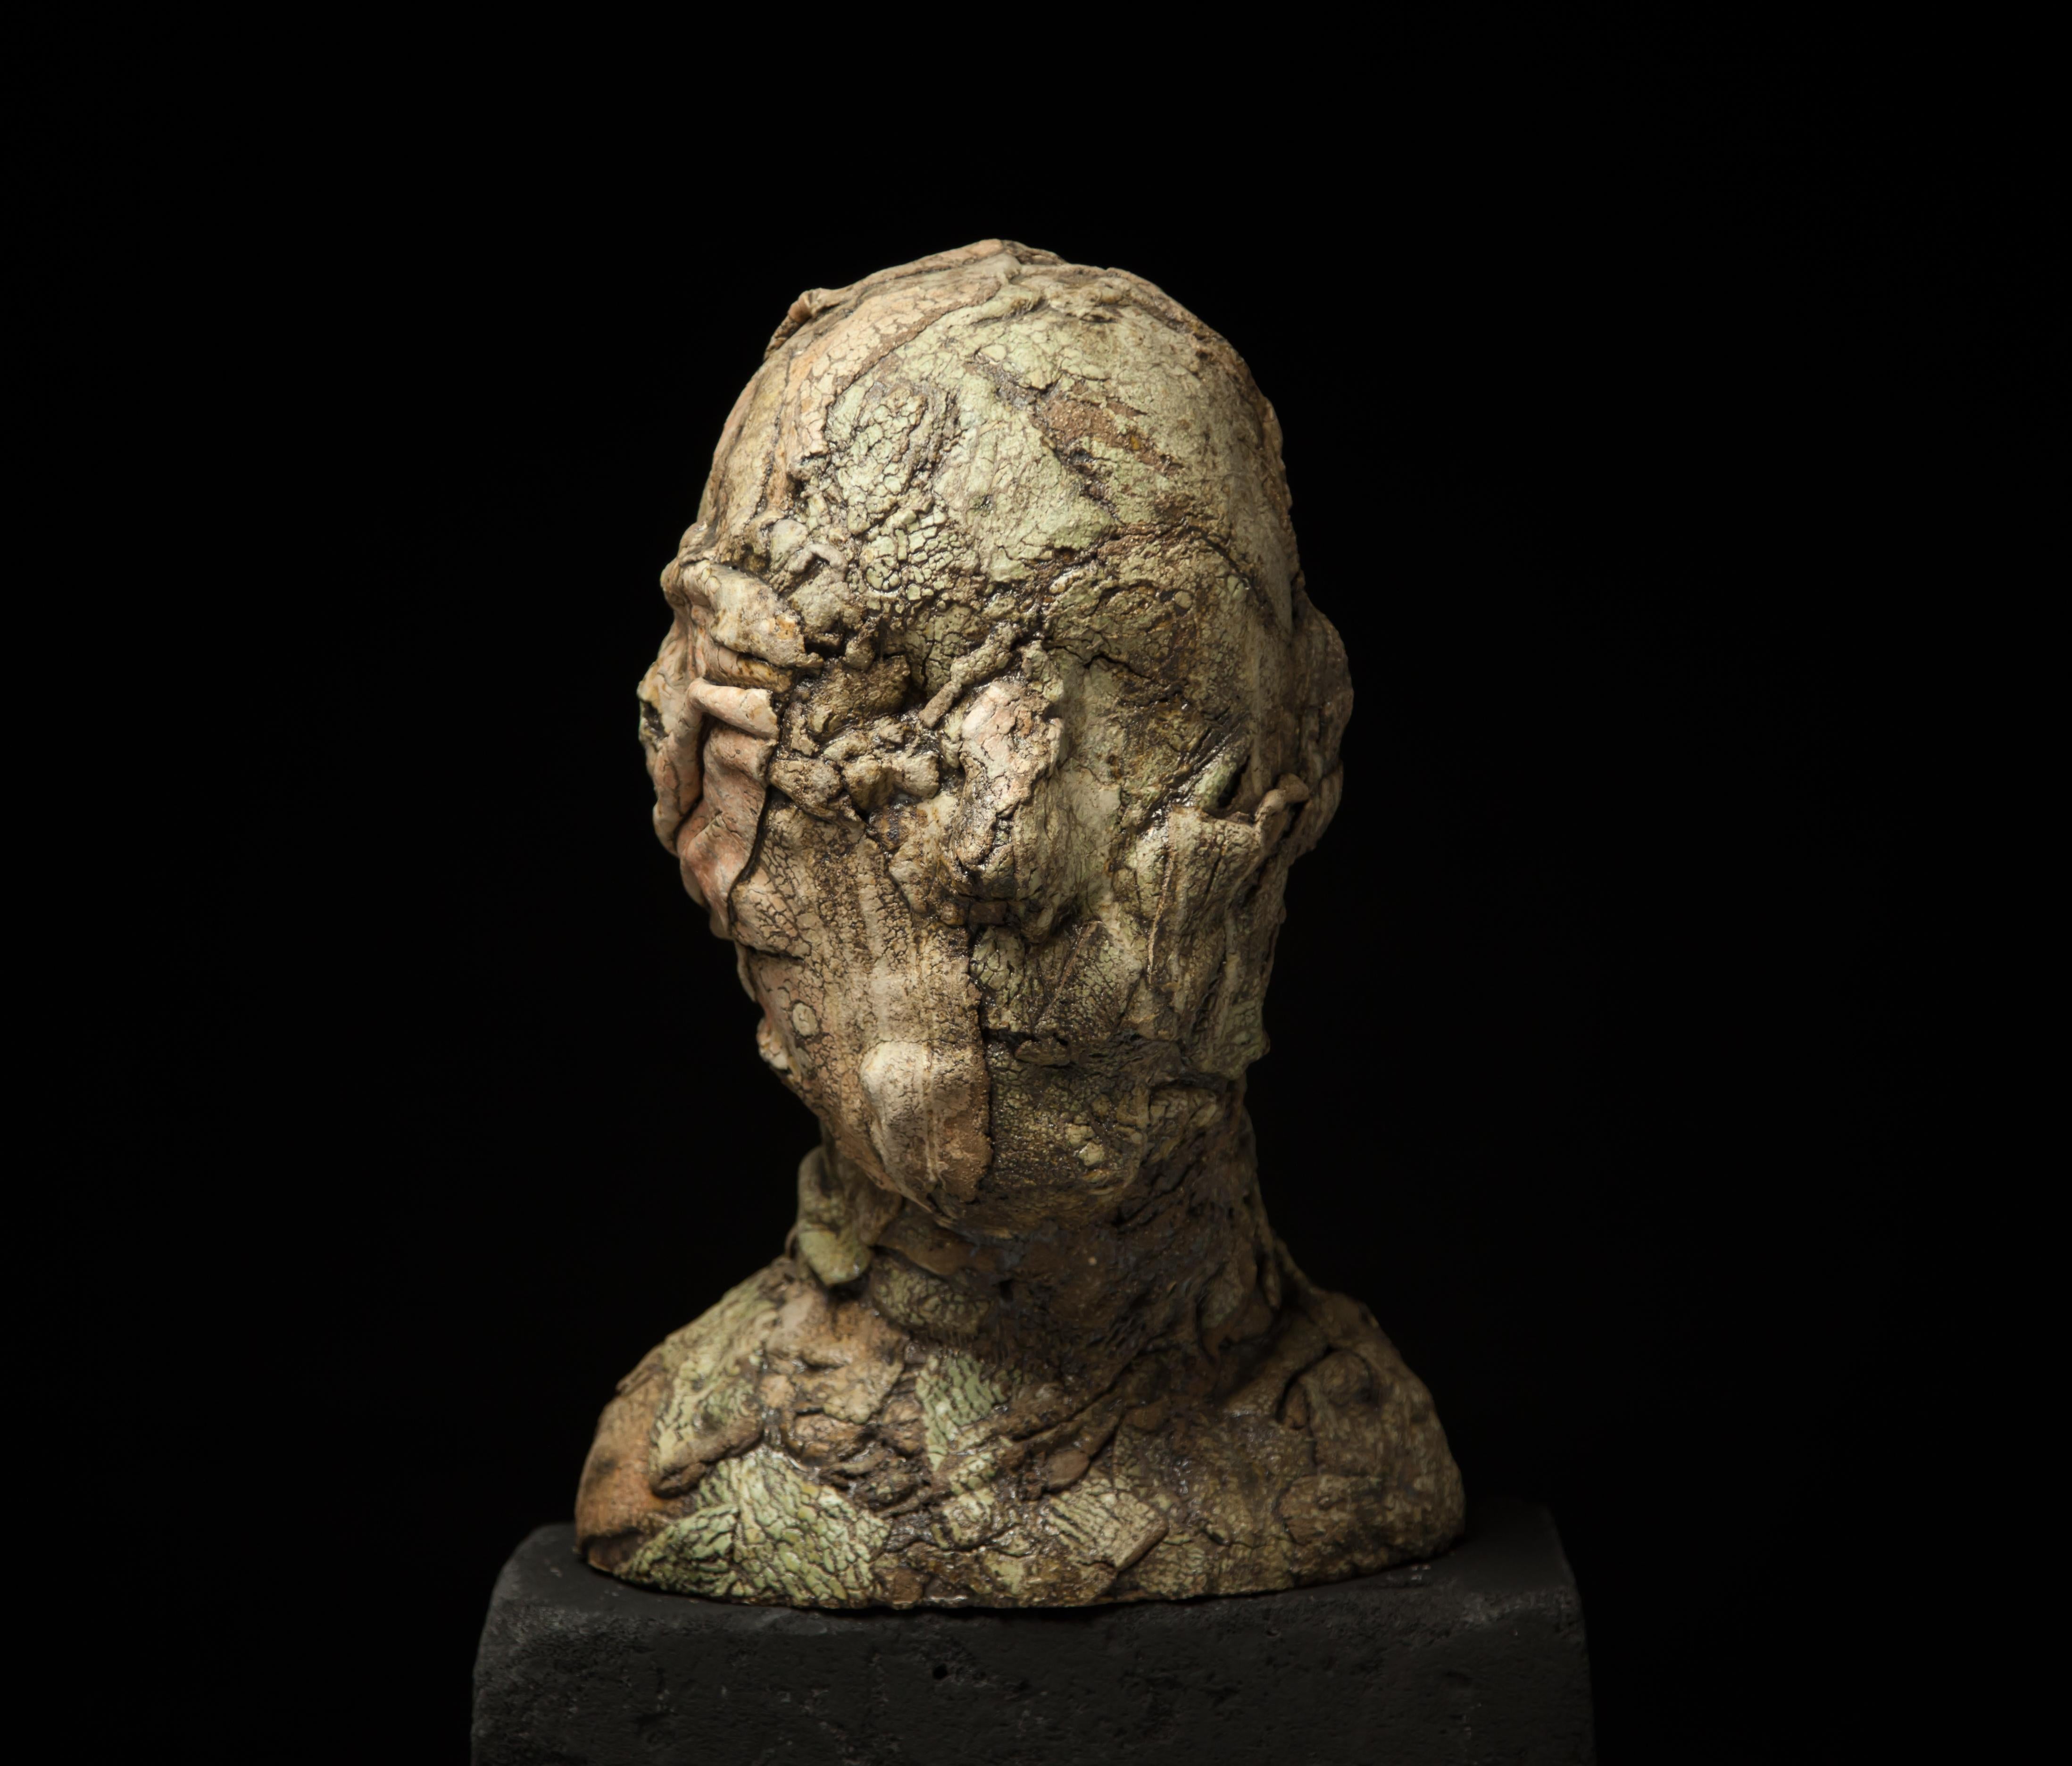 "Flesh" Sculpture Ed. 1/1 19" x 12" x 10" in by Oleksandr Miroshnychenko